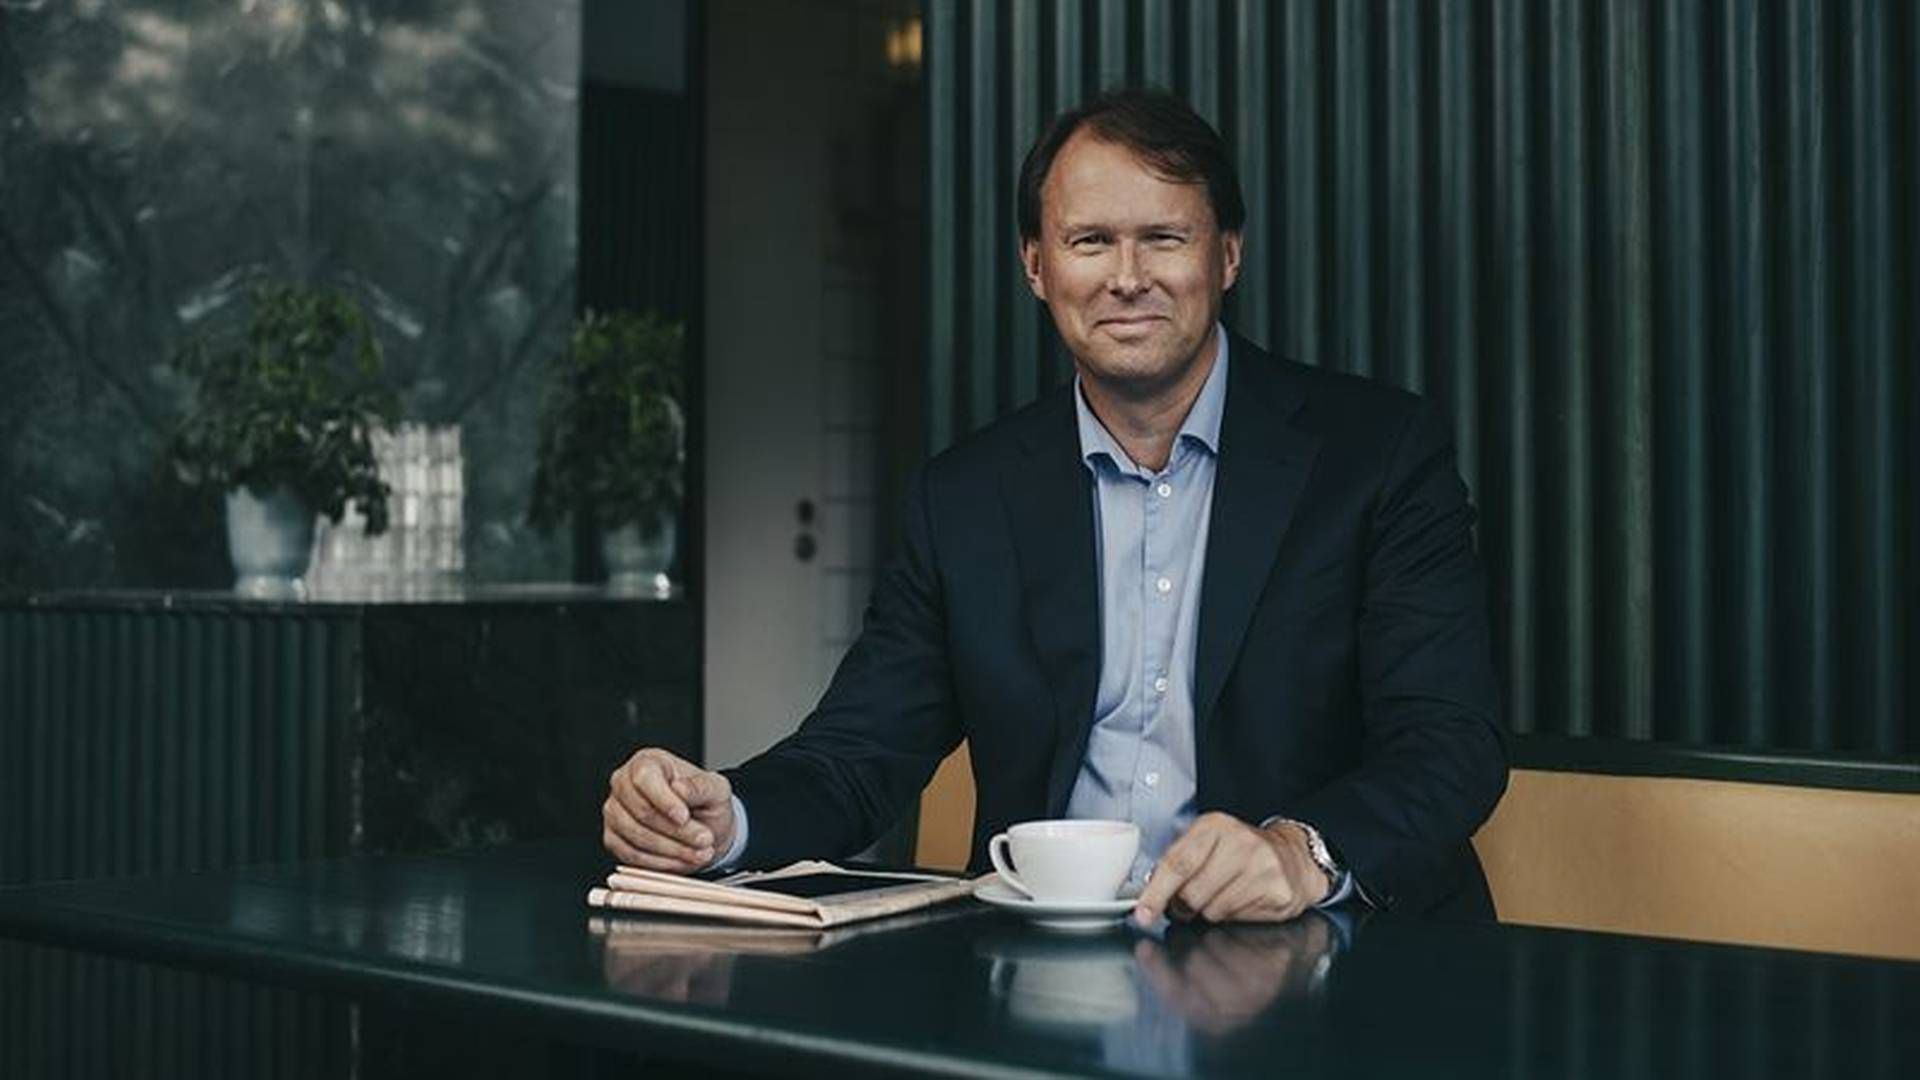 Lars-Göran Orrevall is the CIO of pension firm Skandia. | Photo: PR / Skandia